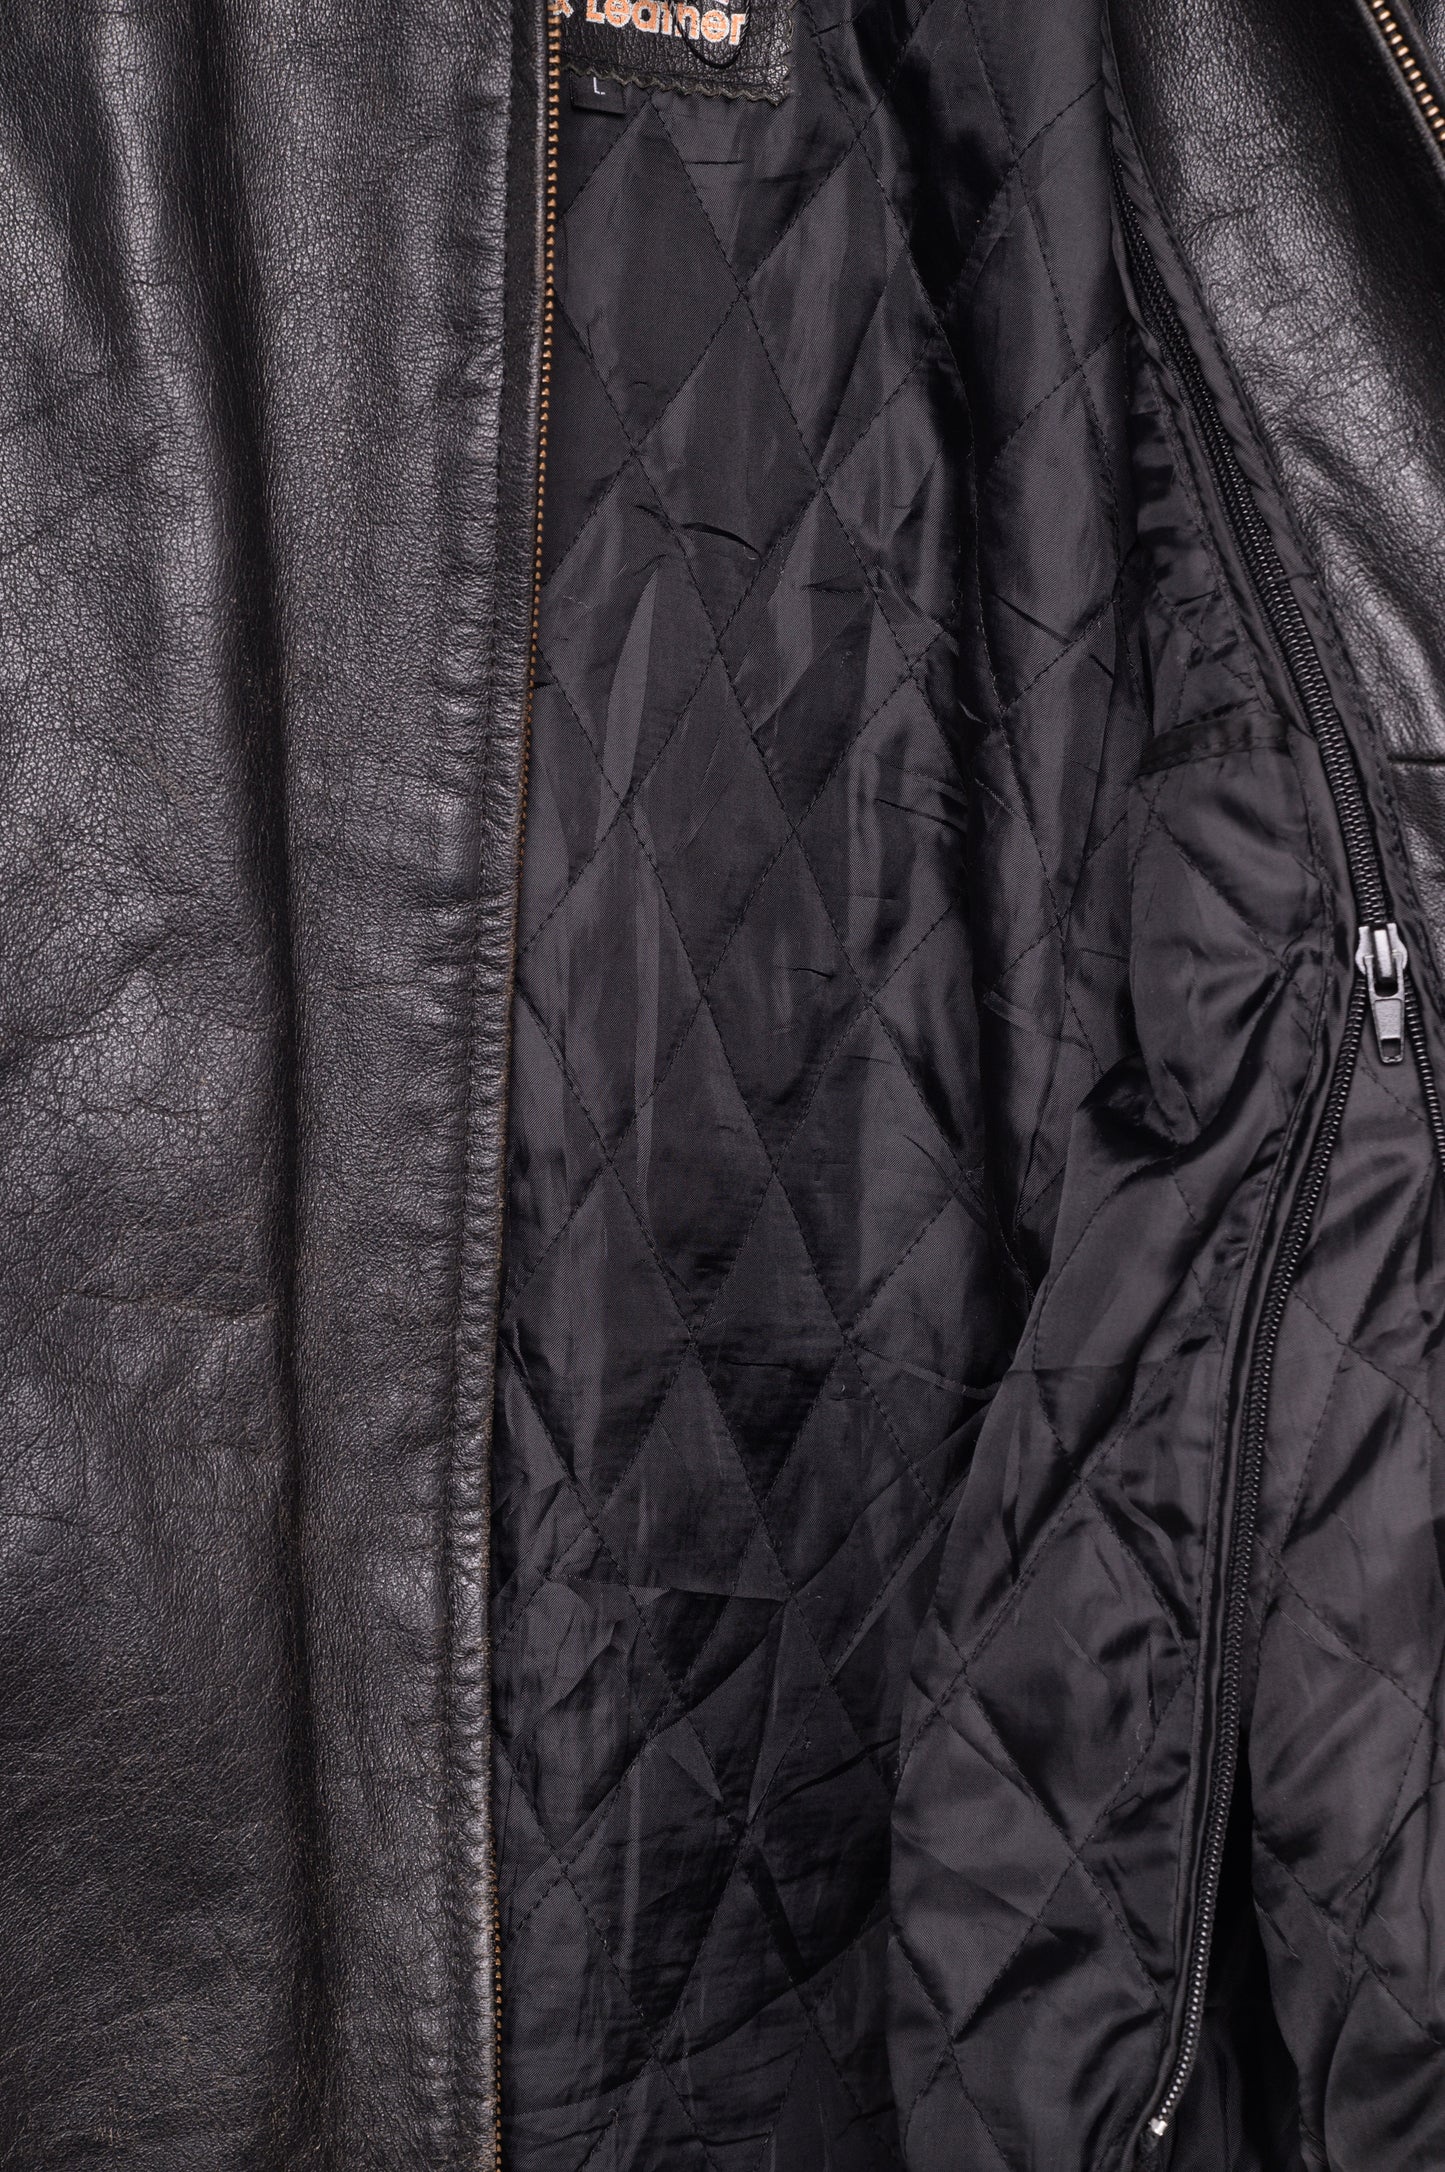 1990s Zip-Up Leather Jacket